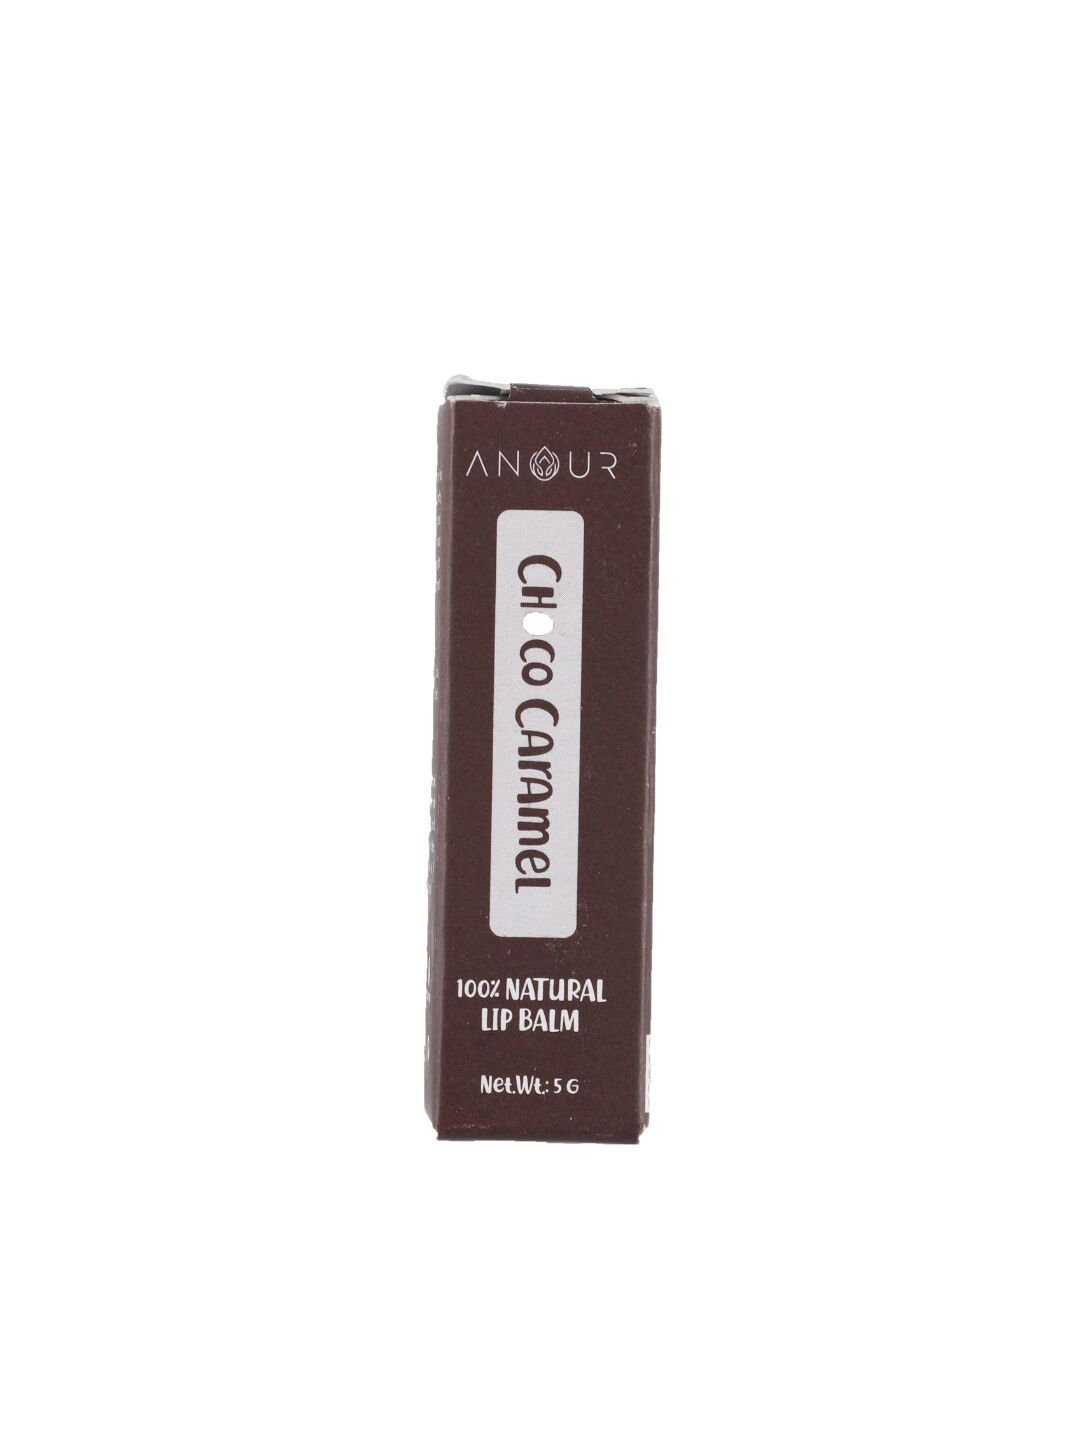 ANOUR Brown Choco Caramel Lip Balm Price in India